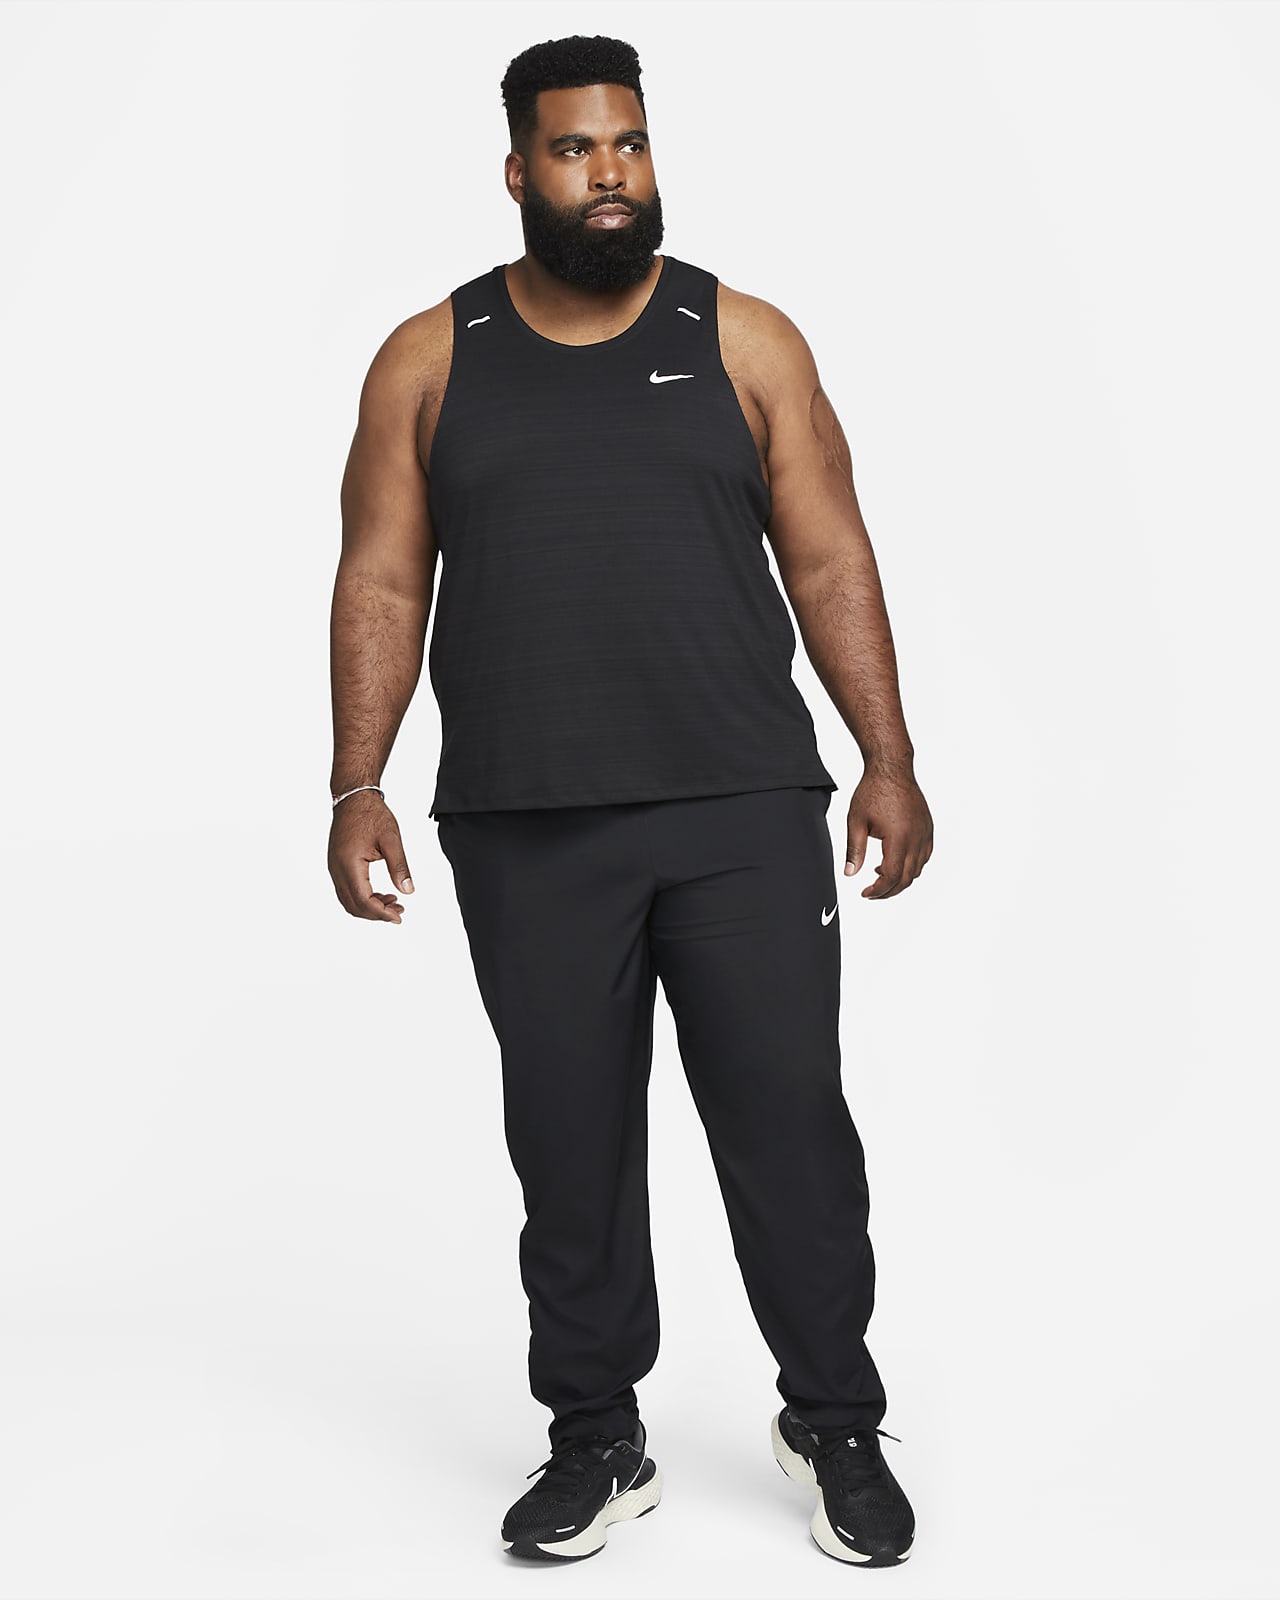 Men's Nike Woven Basketball Warm-Up Pants